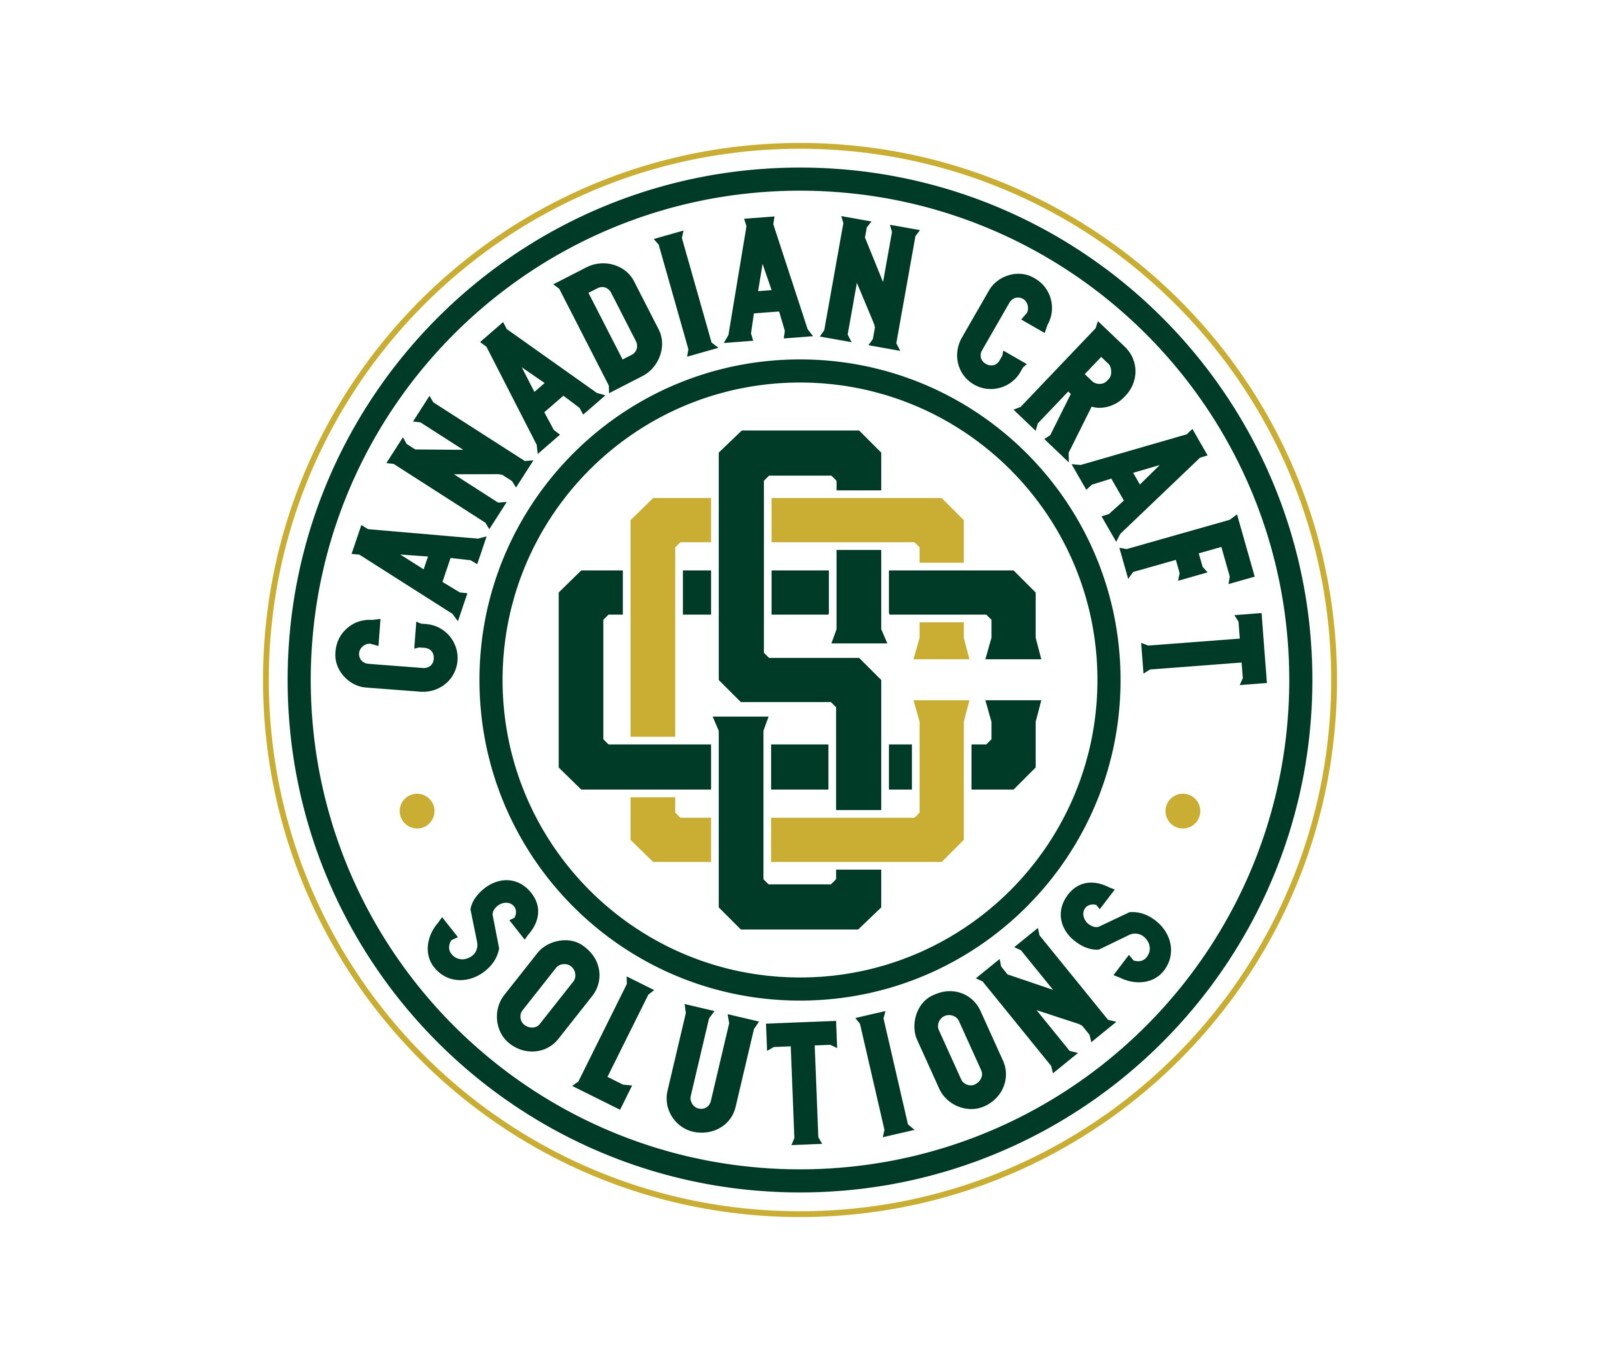 Canadian Craft Solutions Inc. logo